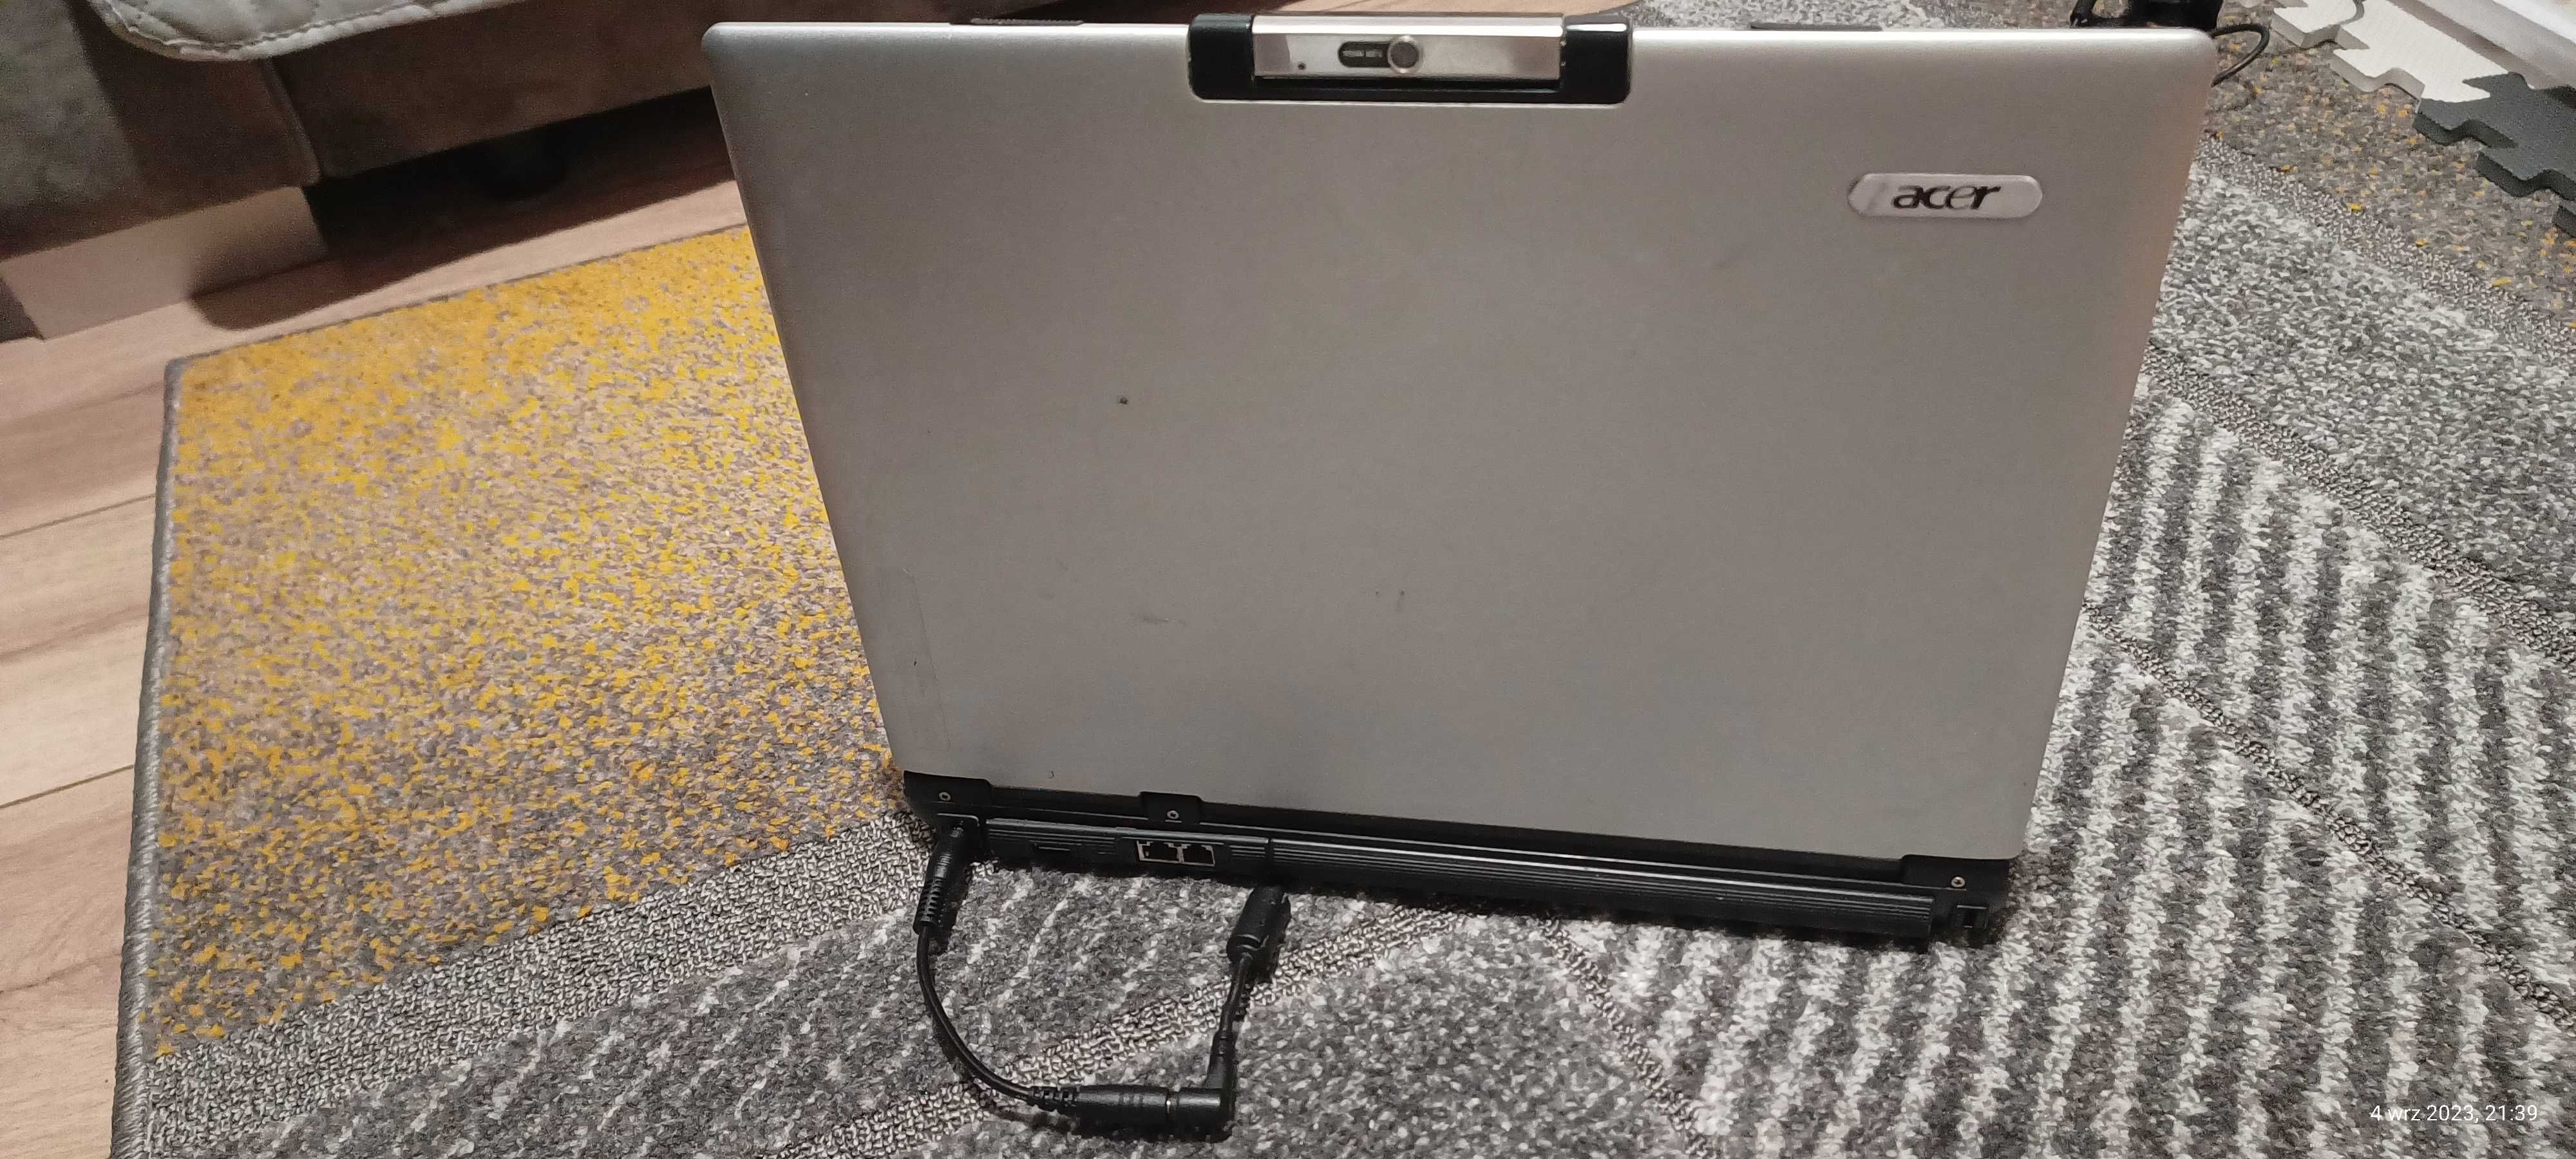 Acer Aspire 5600 retro laptop Linux